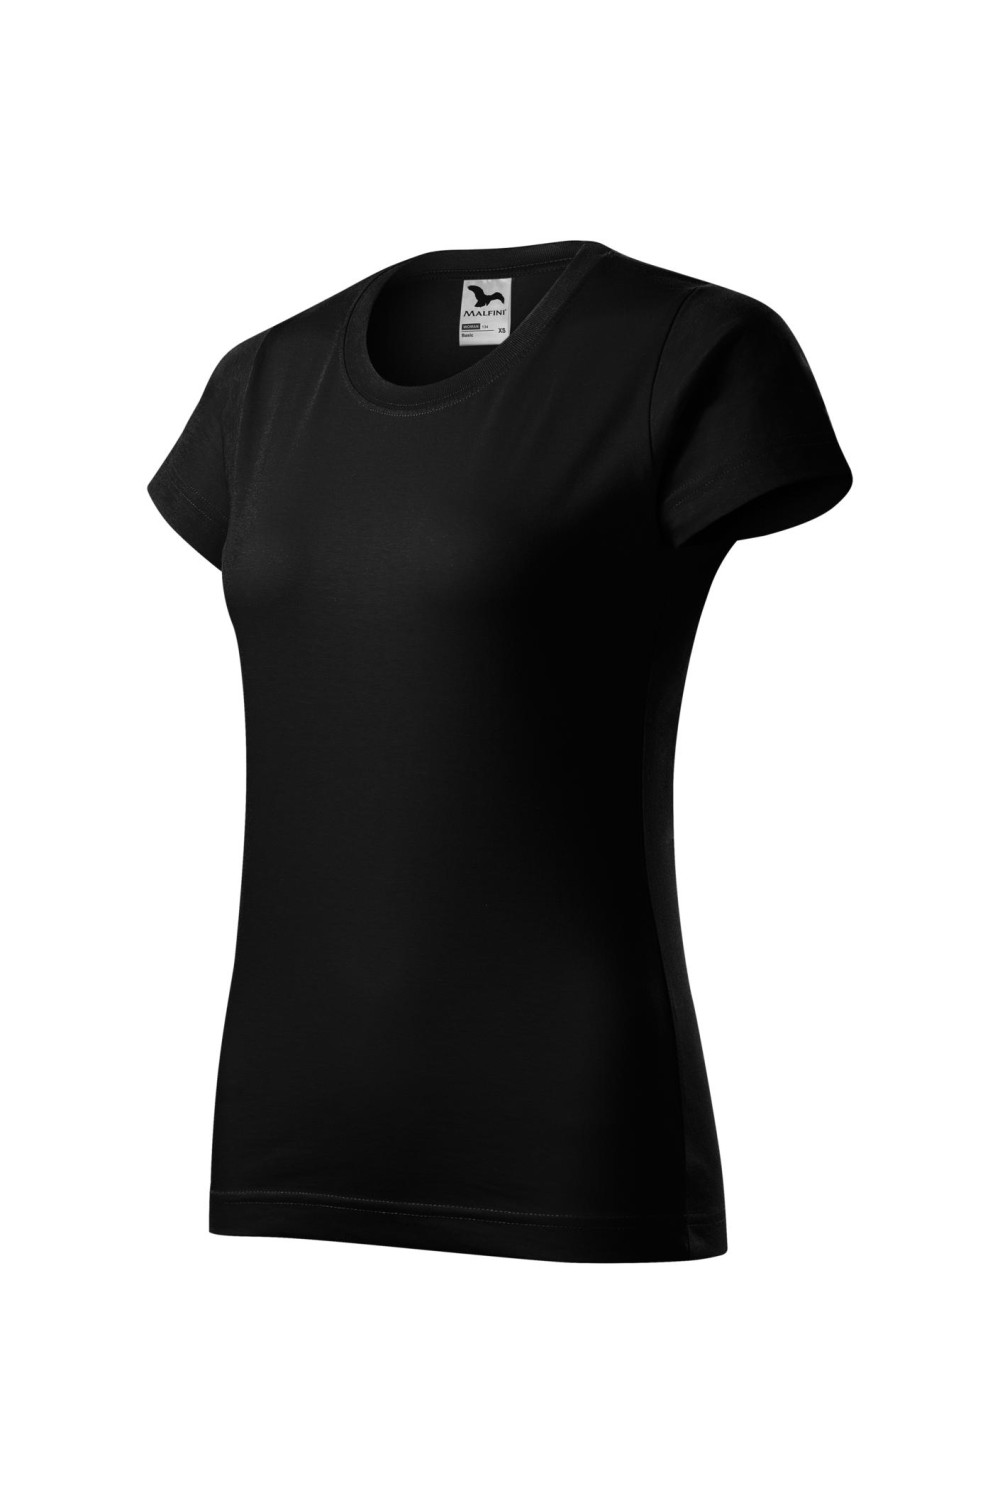 BASIC 134 MALFINI Koszulka damska 100% bawełna t-shirt czarny